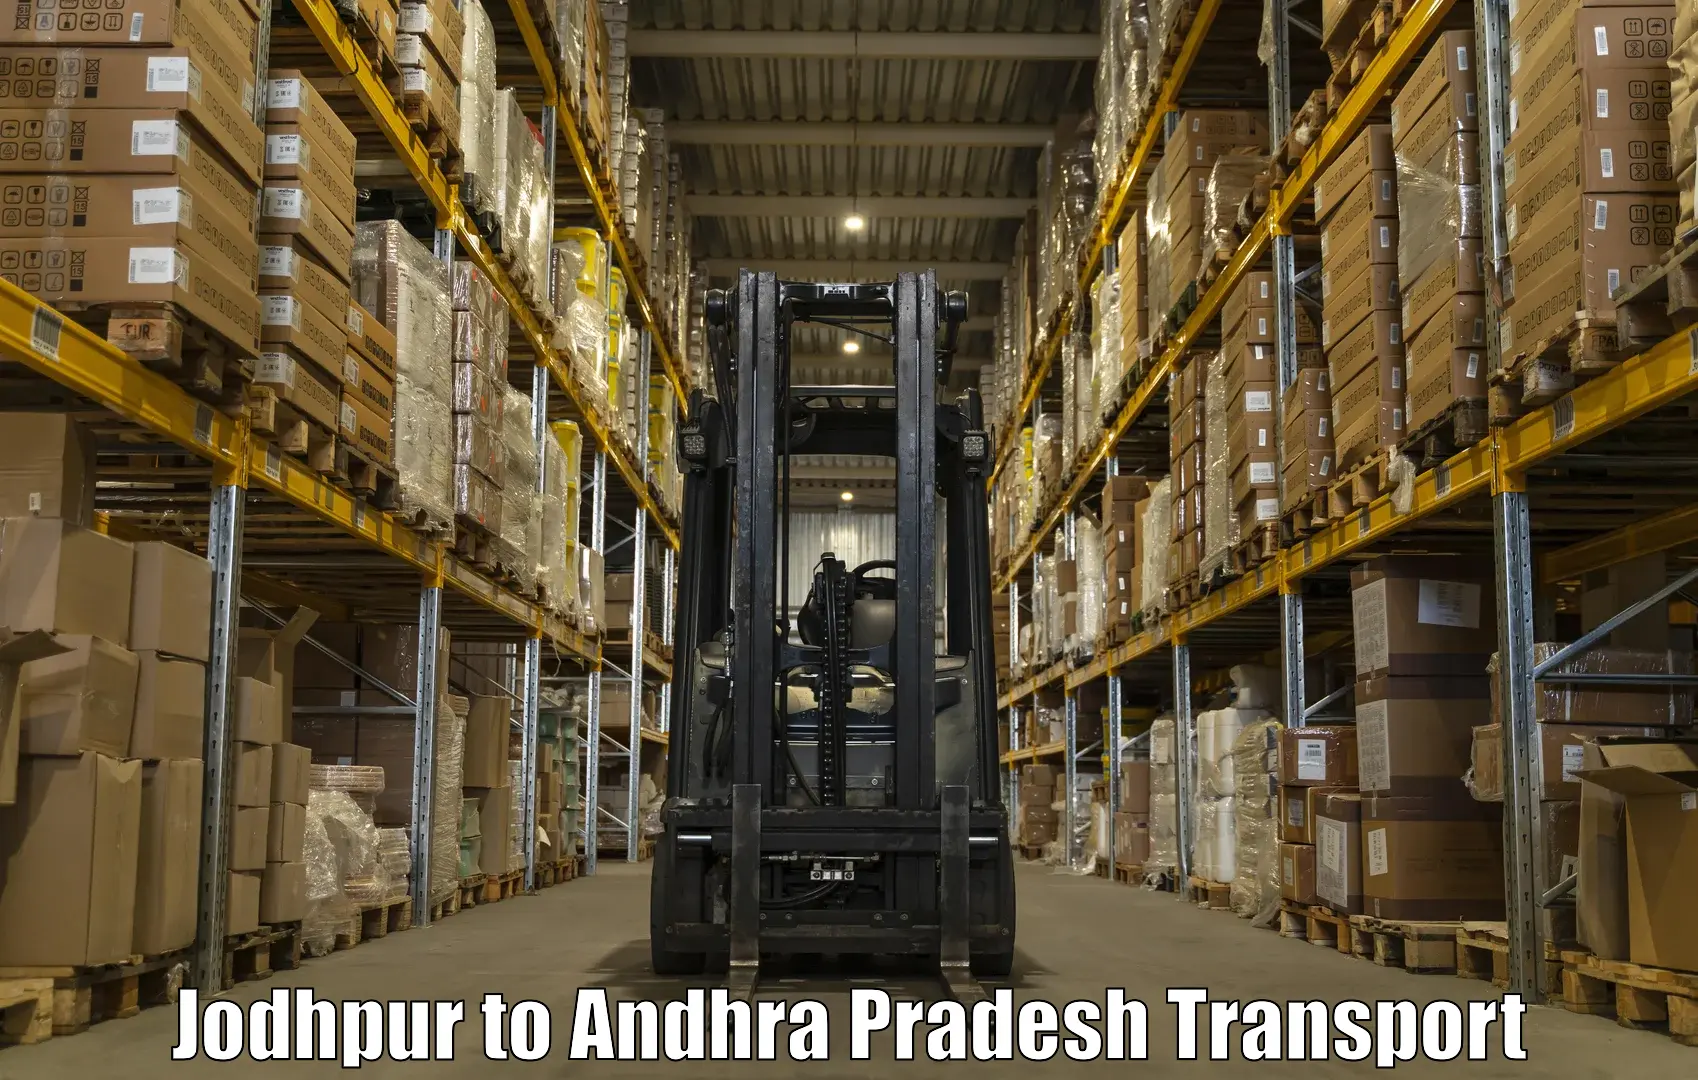 Furniture transport service in Jodhpur to Sri City